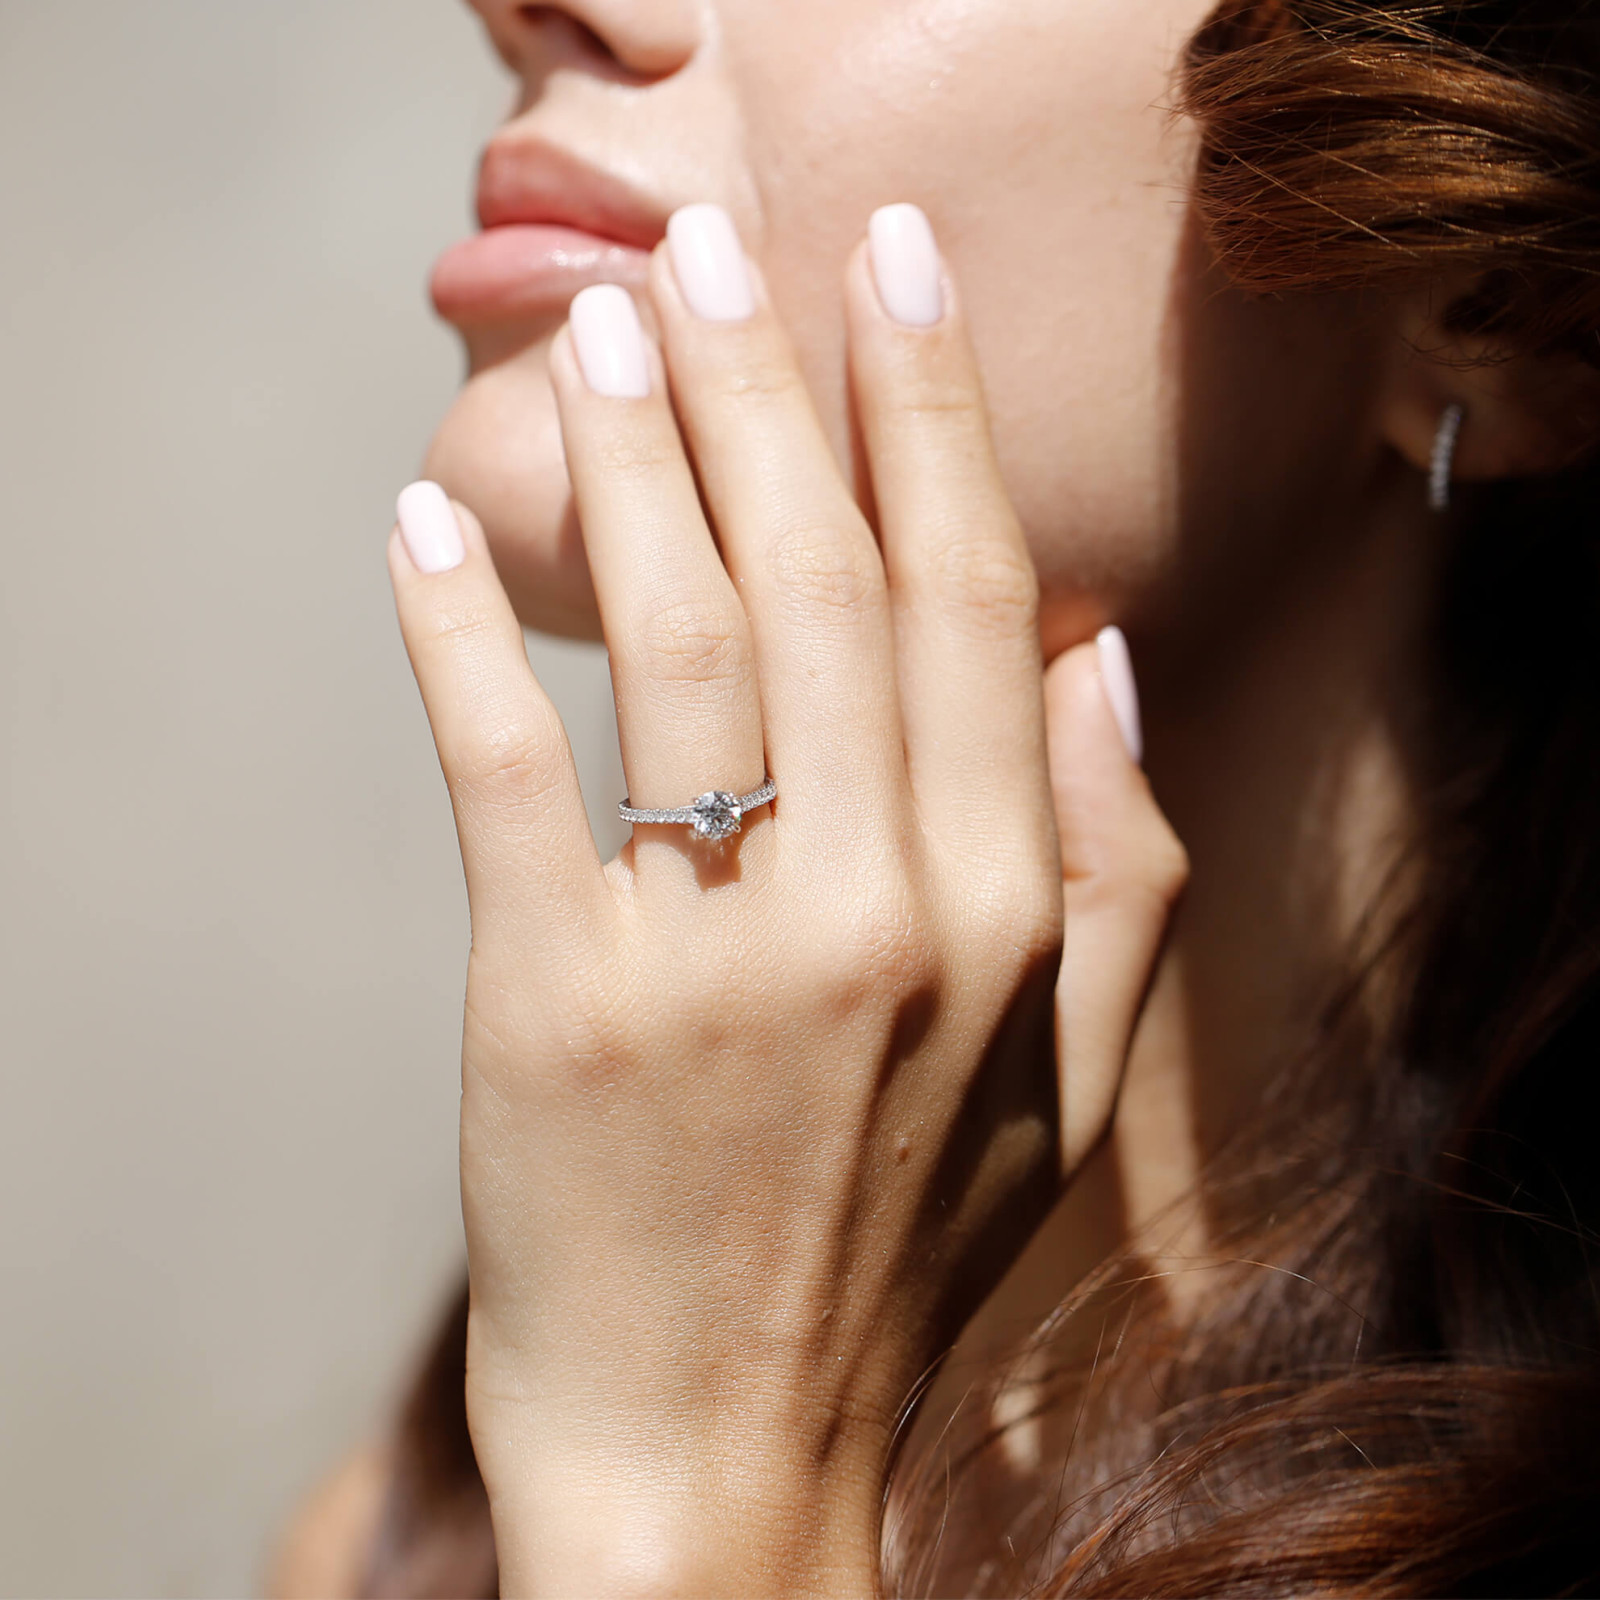 Round Diamond Engagement Ring with Scallop Set Diamond Band